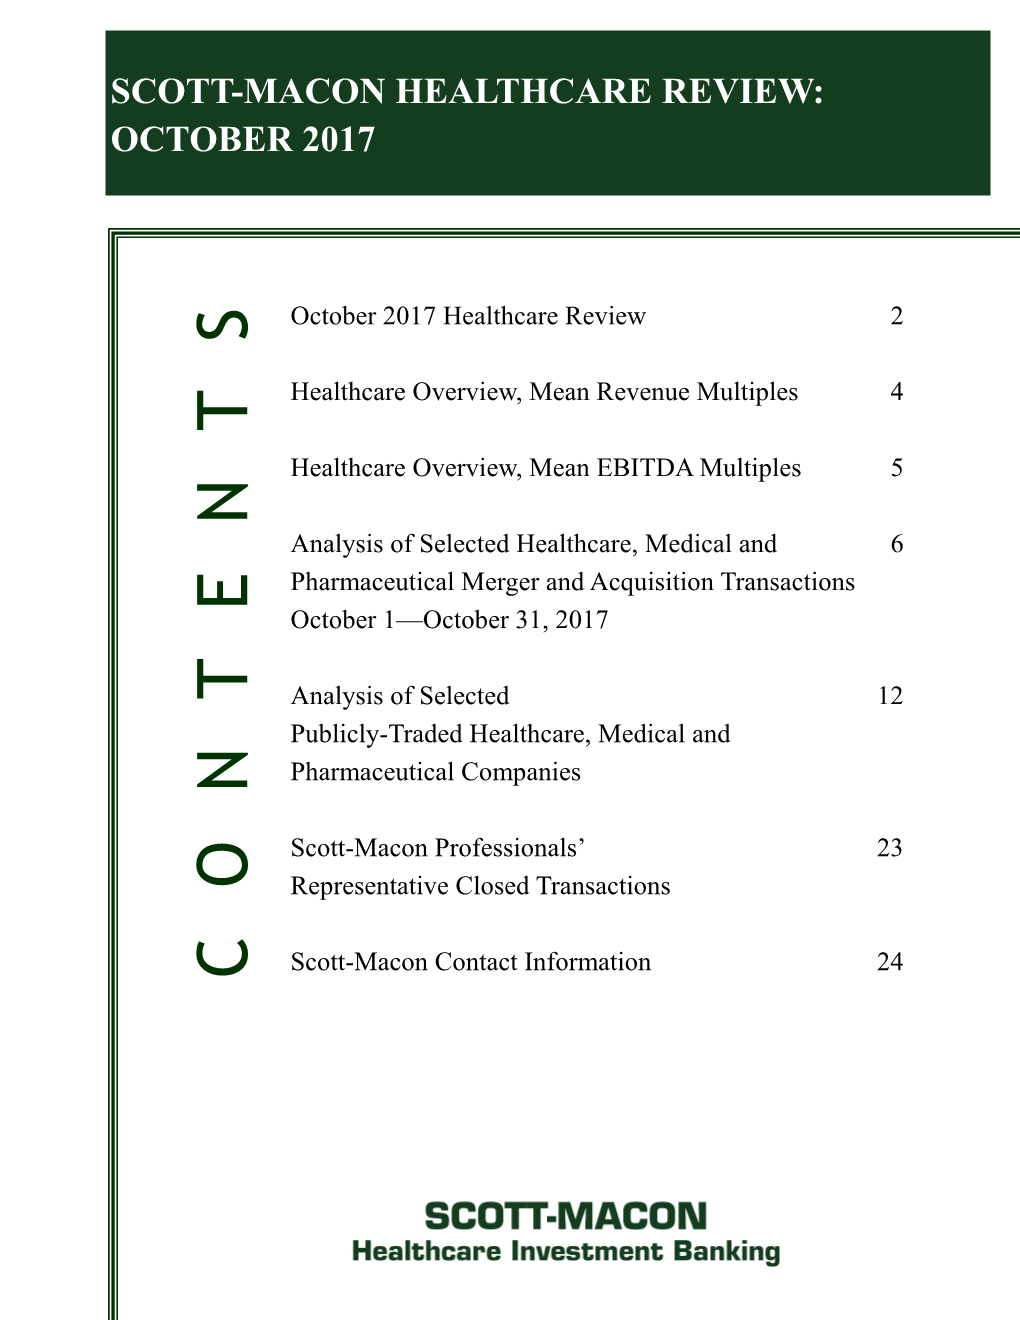 Scott-Macon Healthcare Review: October 2017